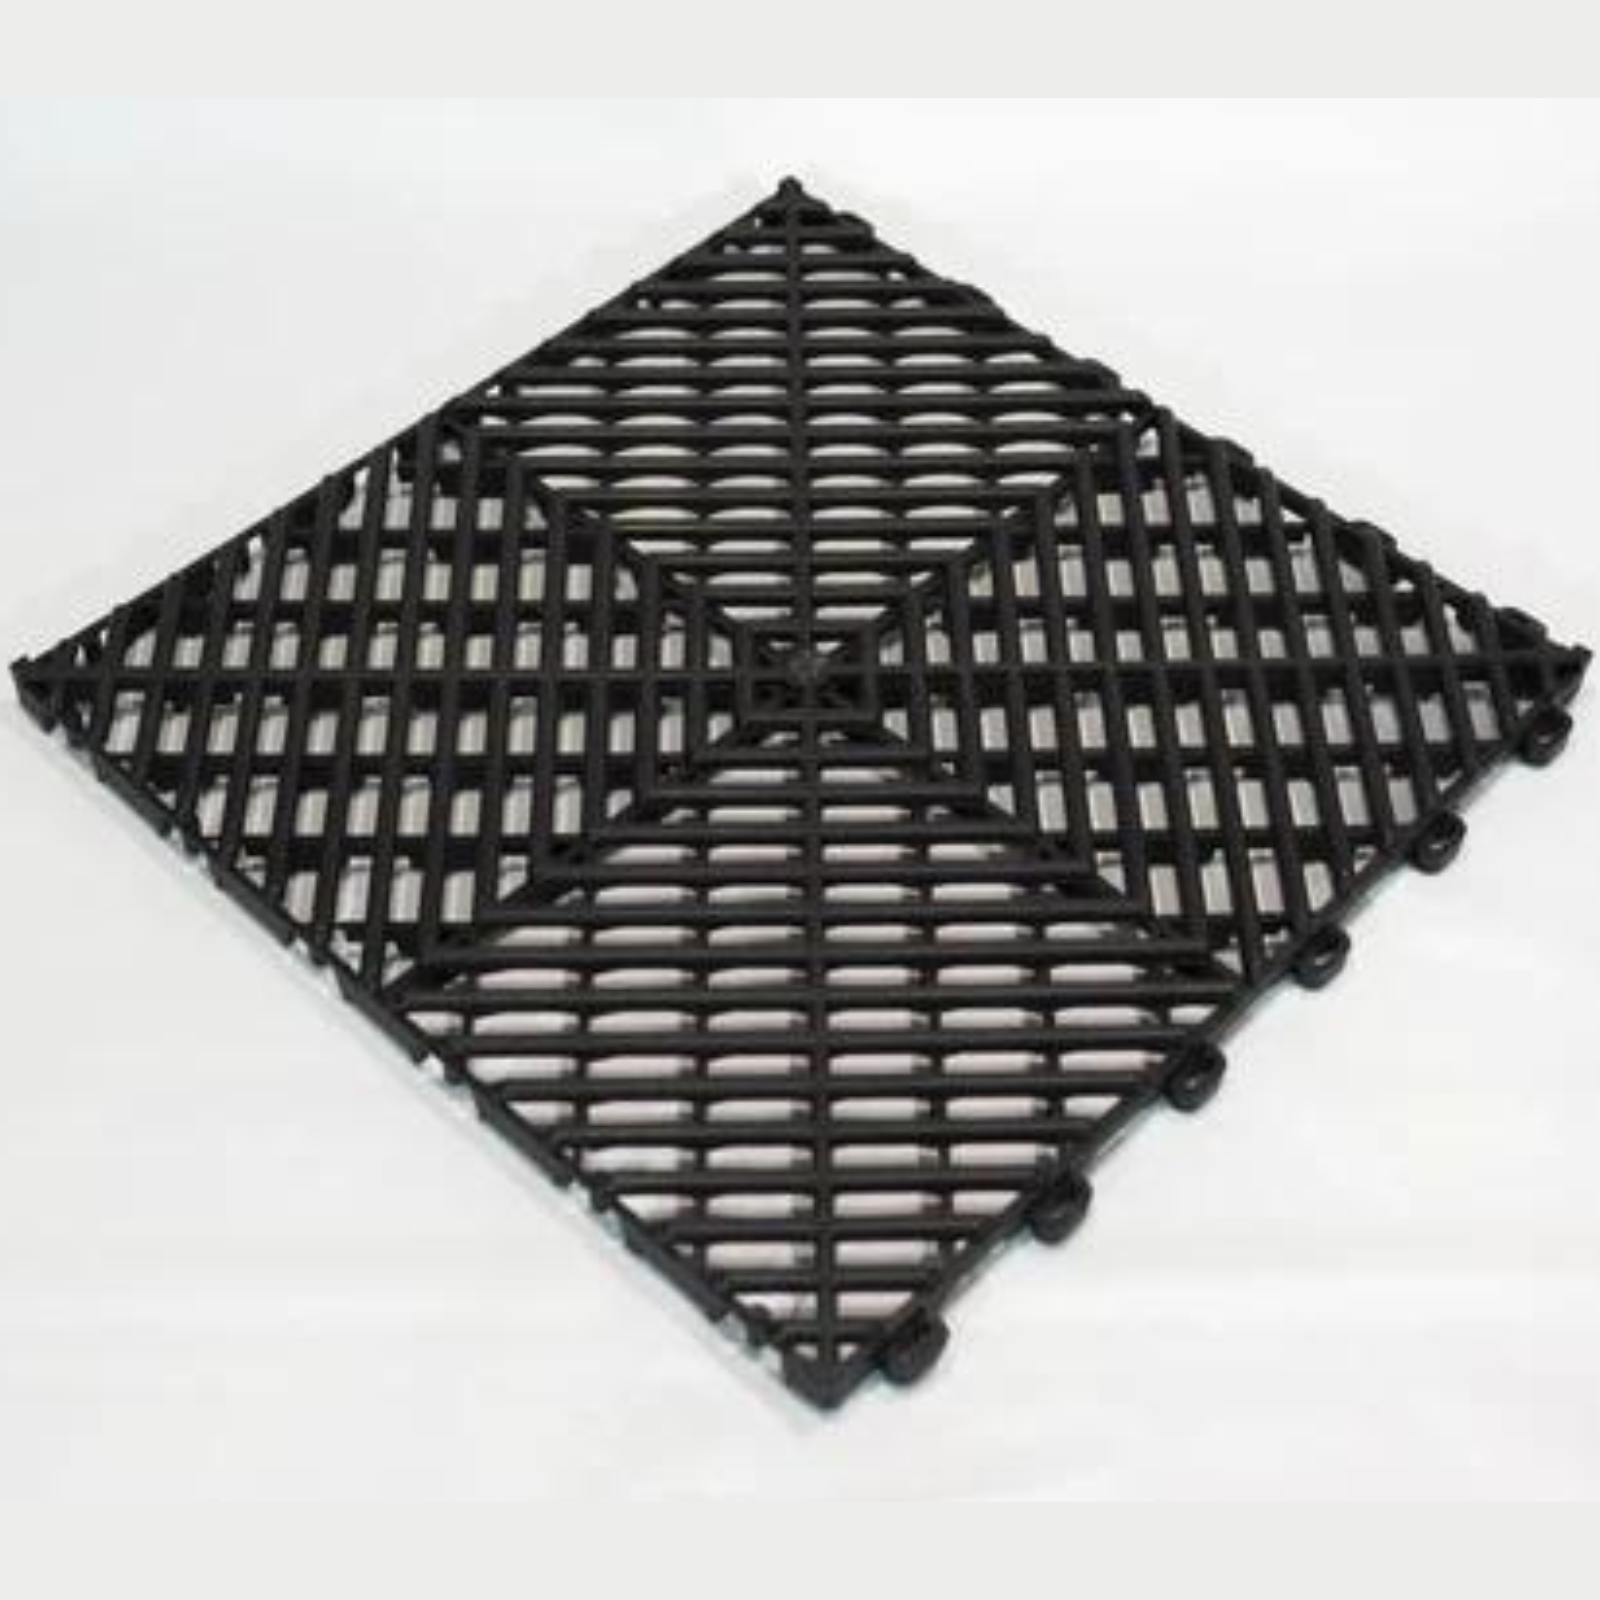 Modular Garage Flooring Tile - Box with 25 tiles- Black color